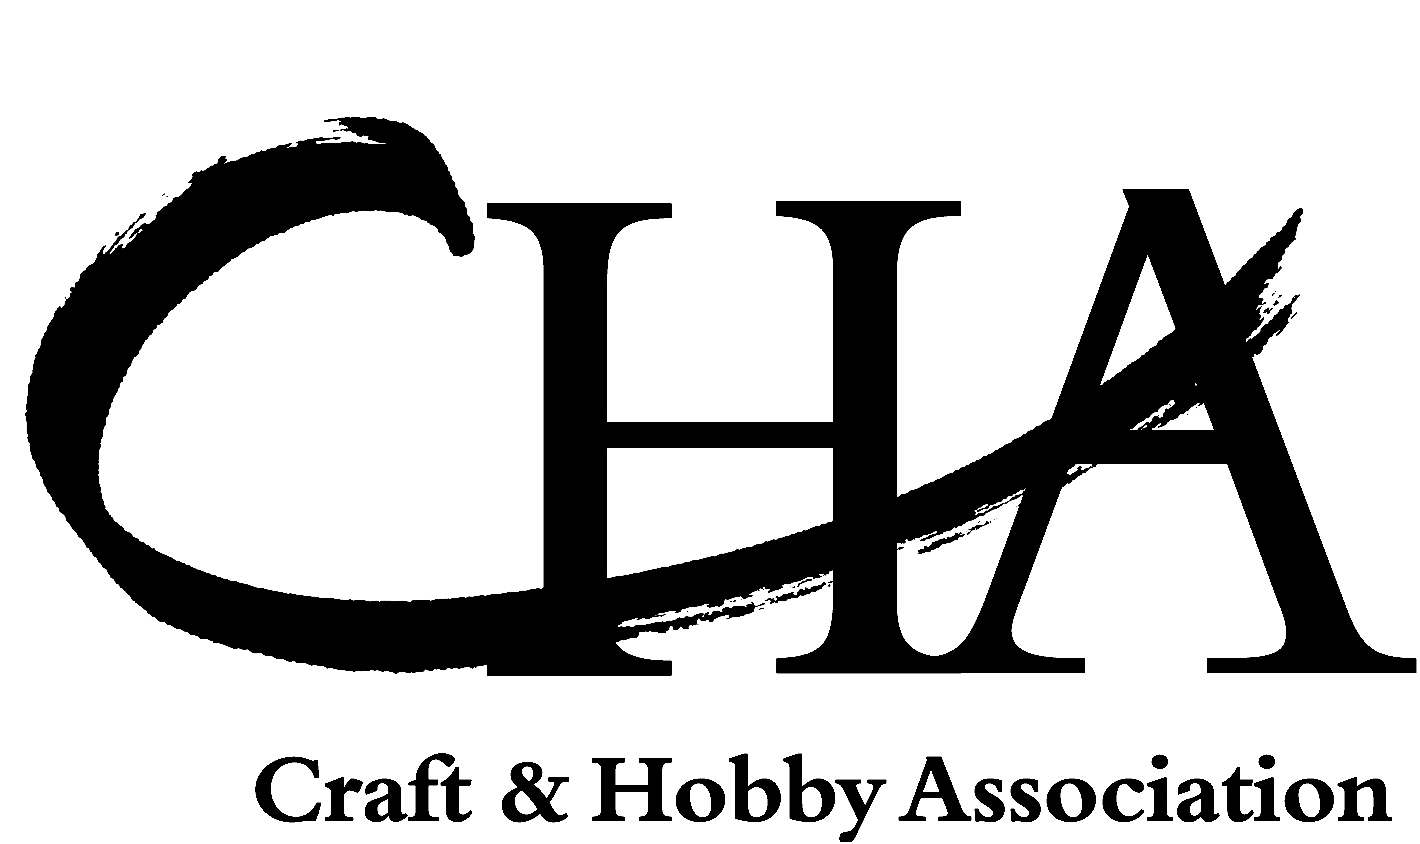 CHA CRAFT &amp; HOBBY ASSOCIATION